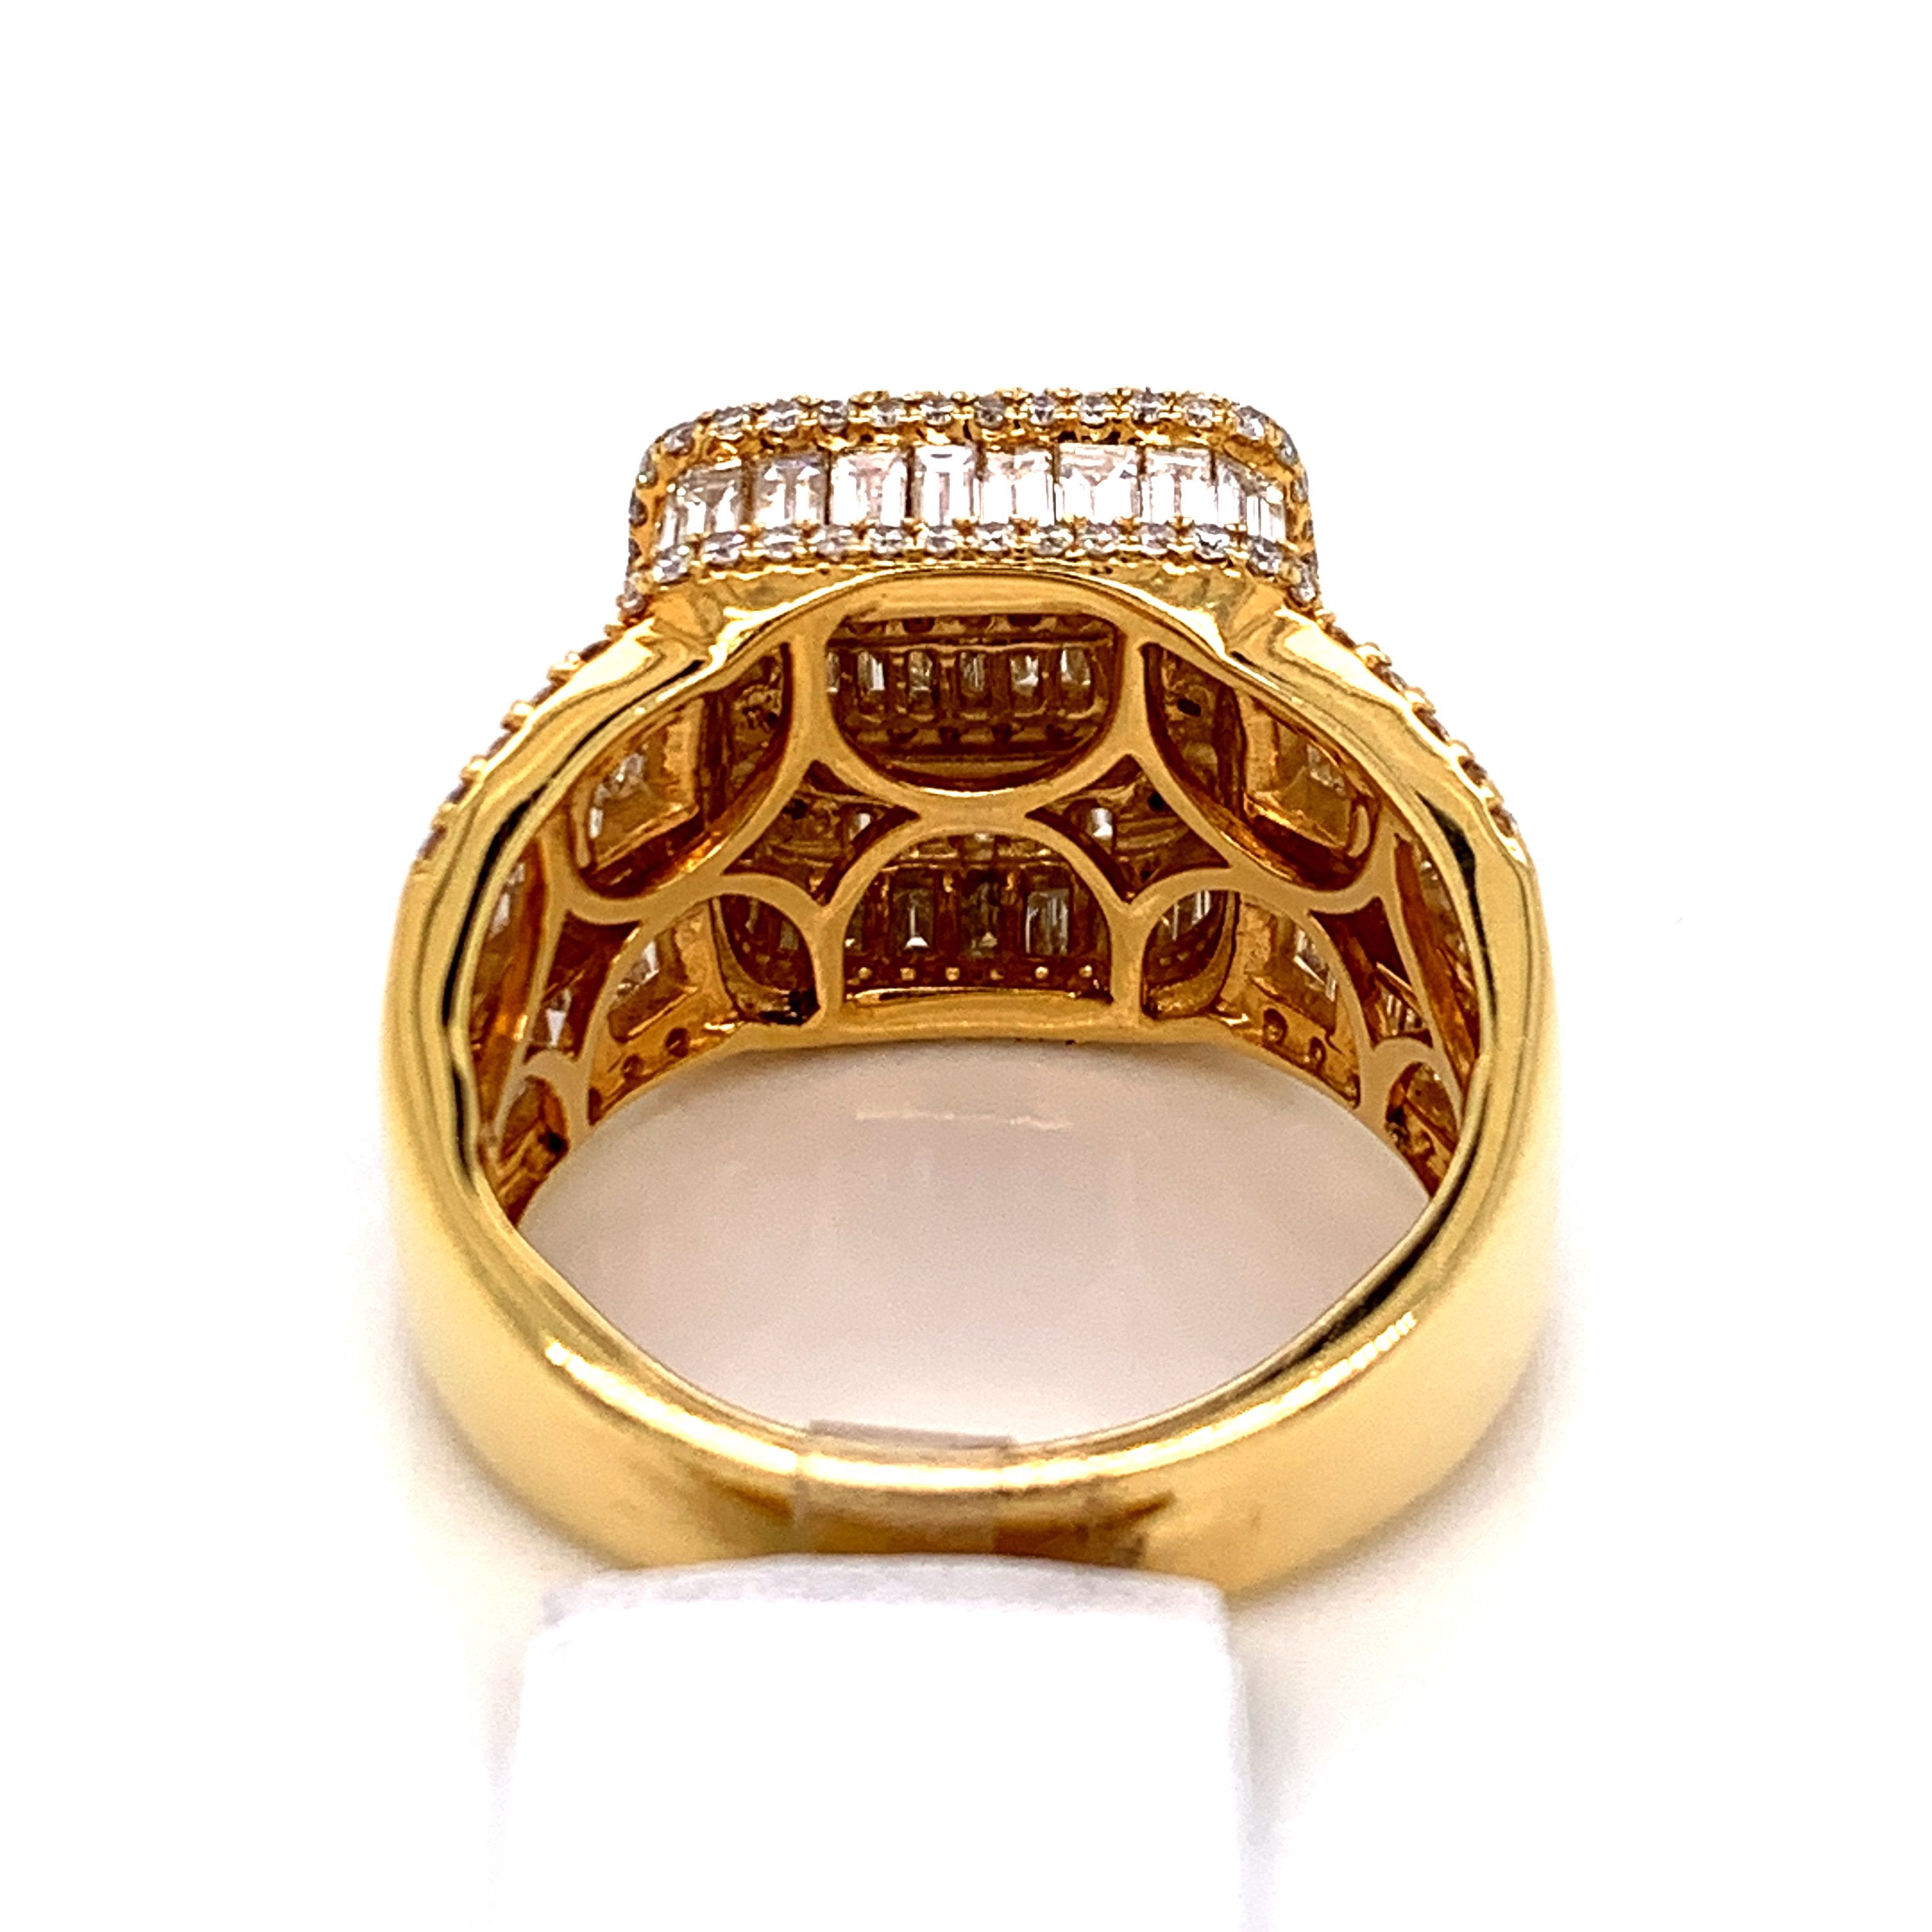 4.28CT Diamond Ring in 14K Gold - White Carat Diamonds 